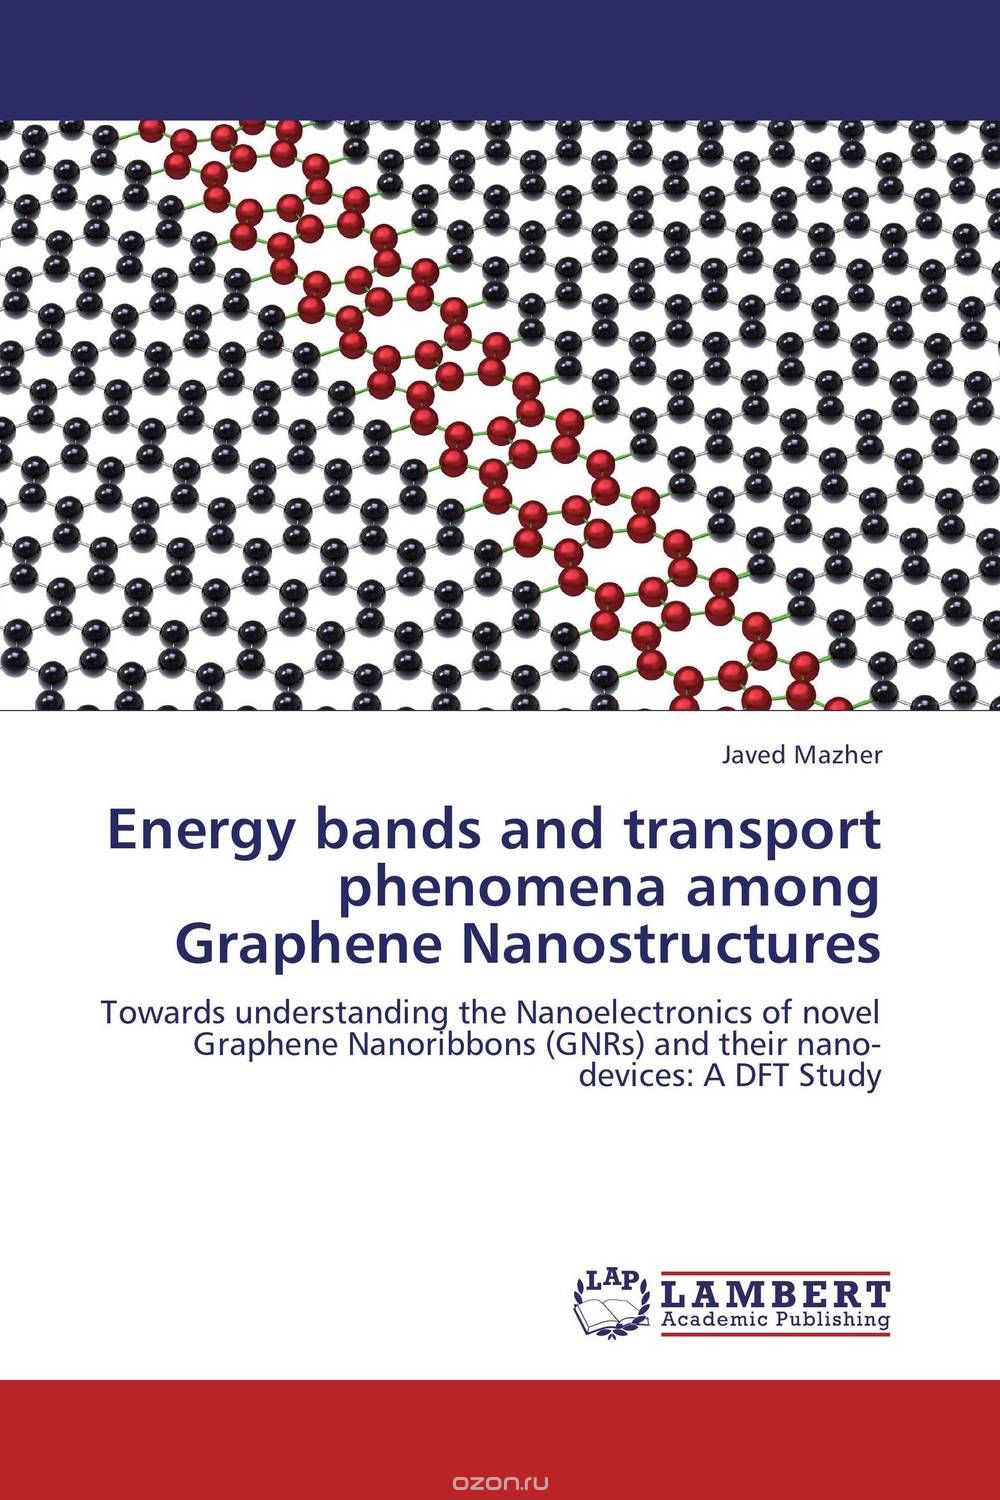 Energy bands and transport phenomena among Graphene Nanostructures